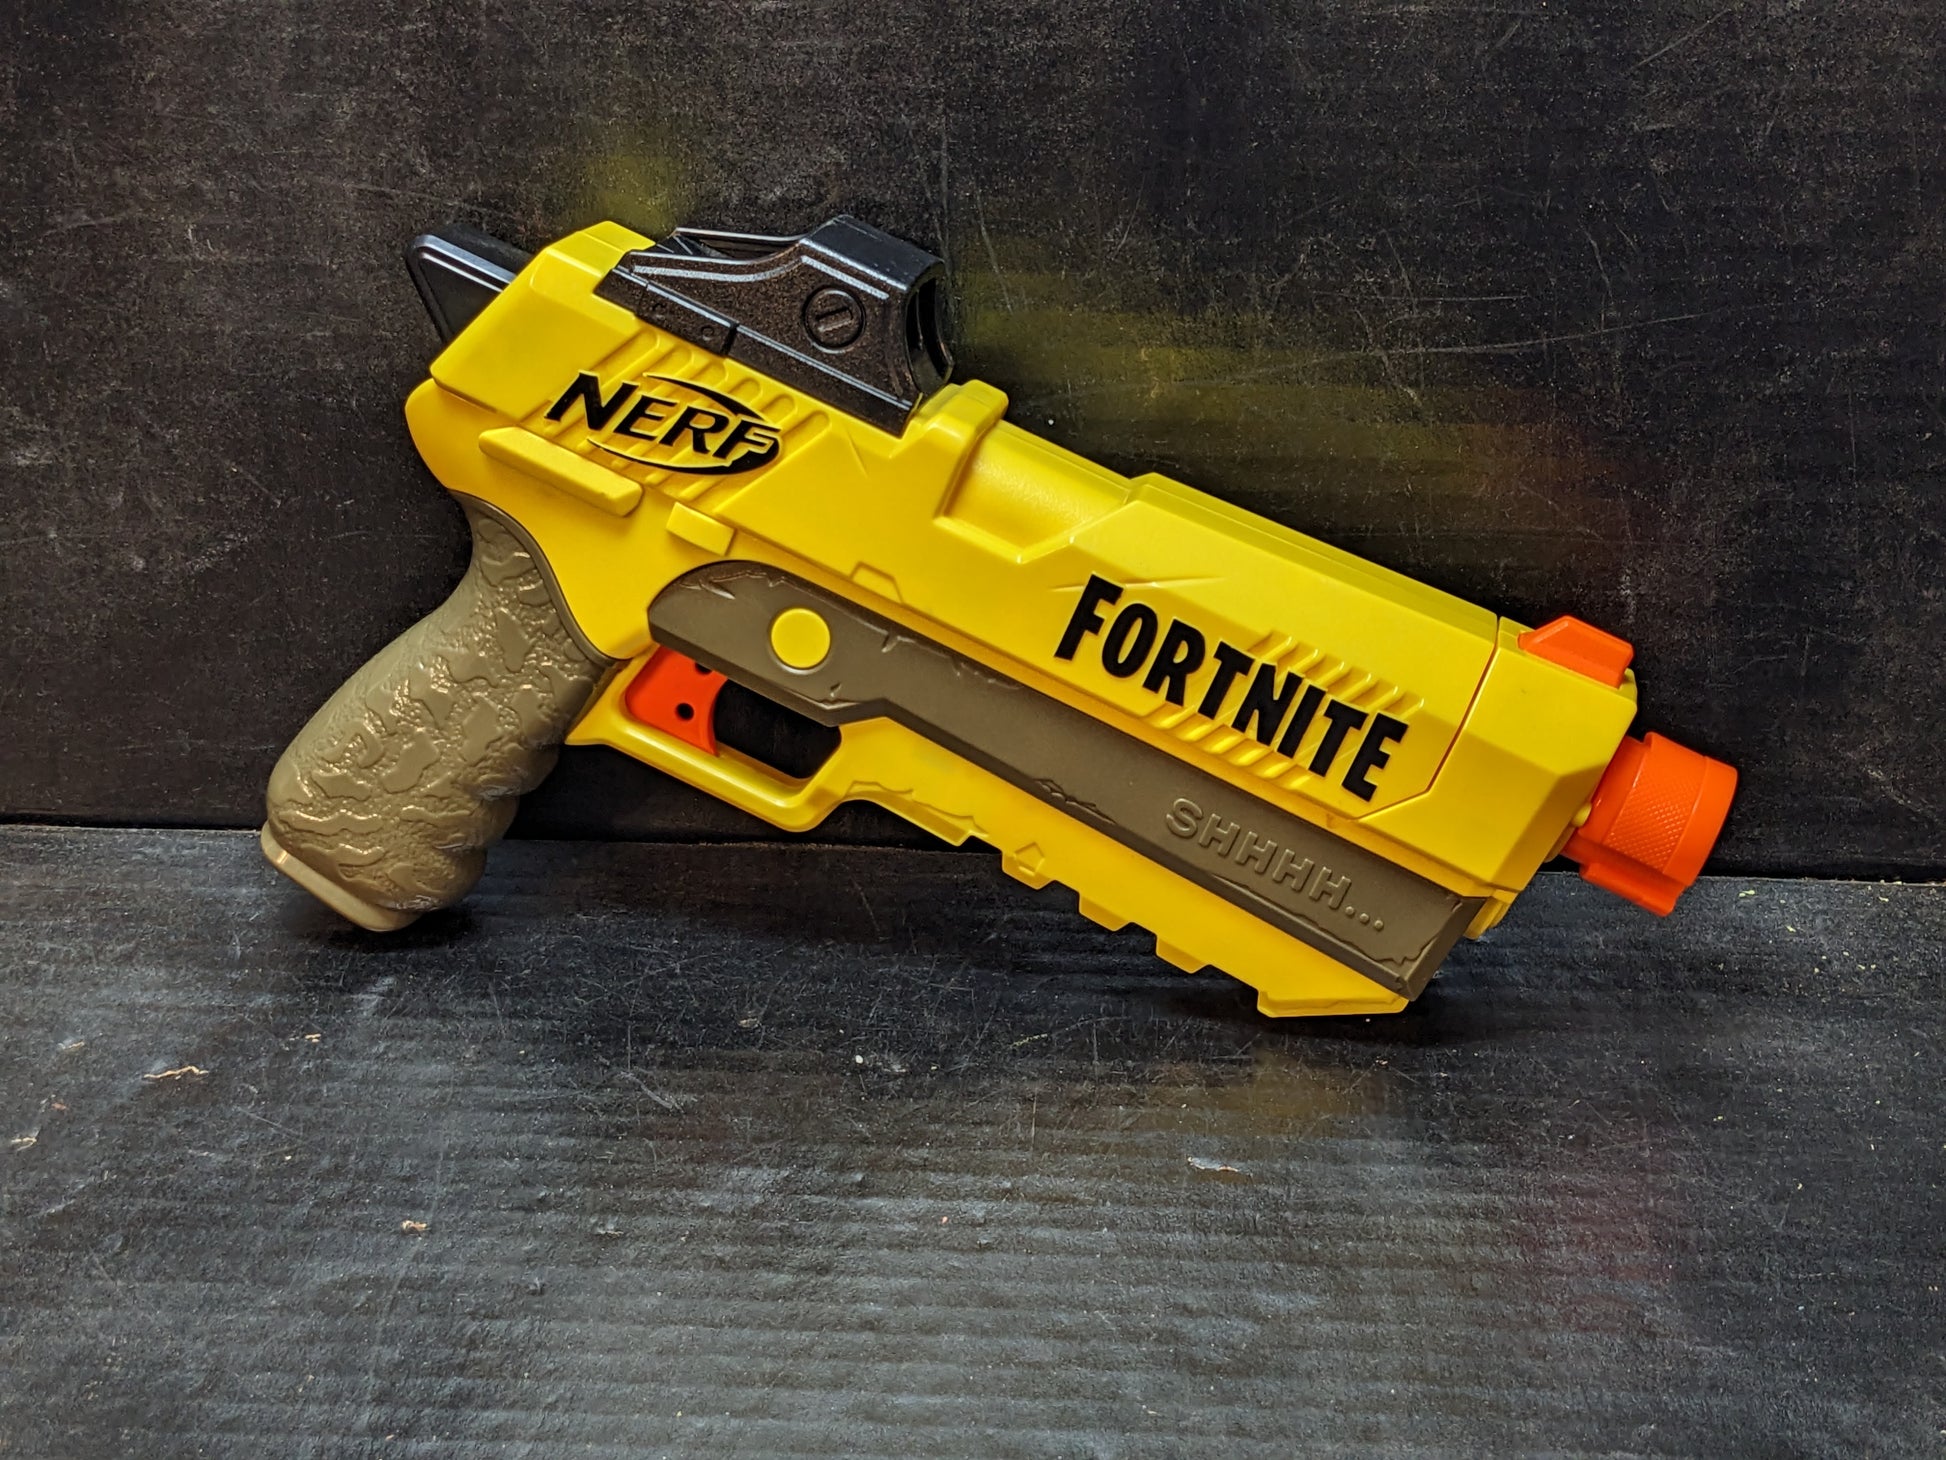 Where to buy Fortnite Nerf guns